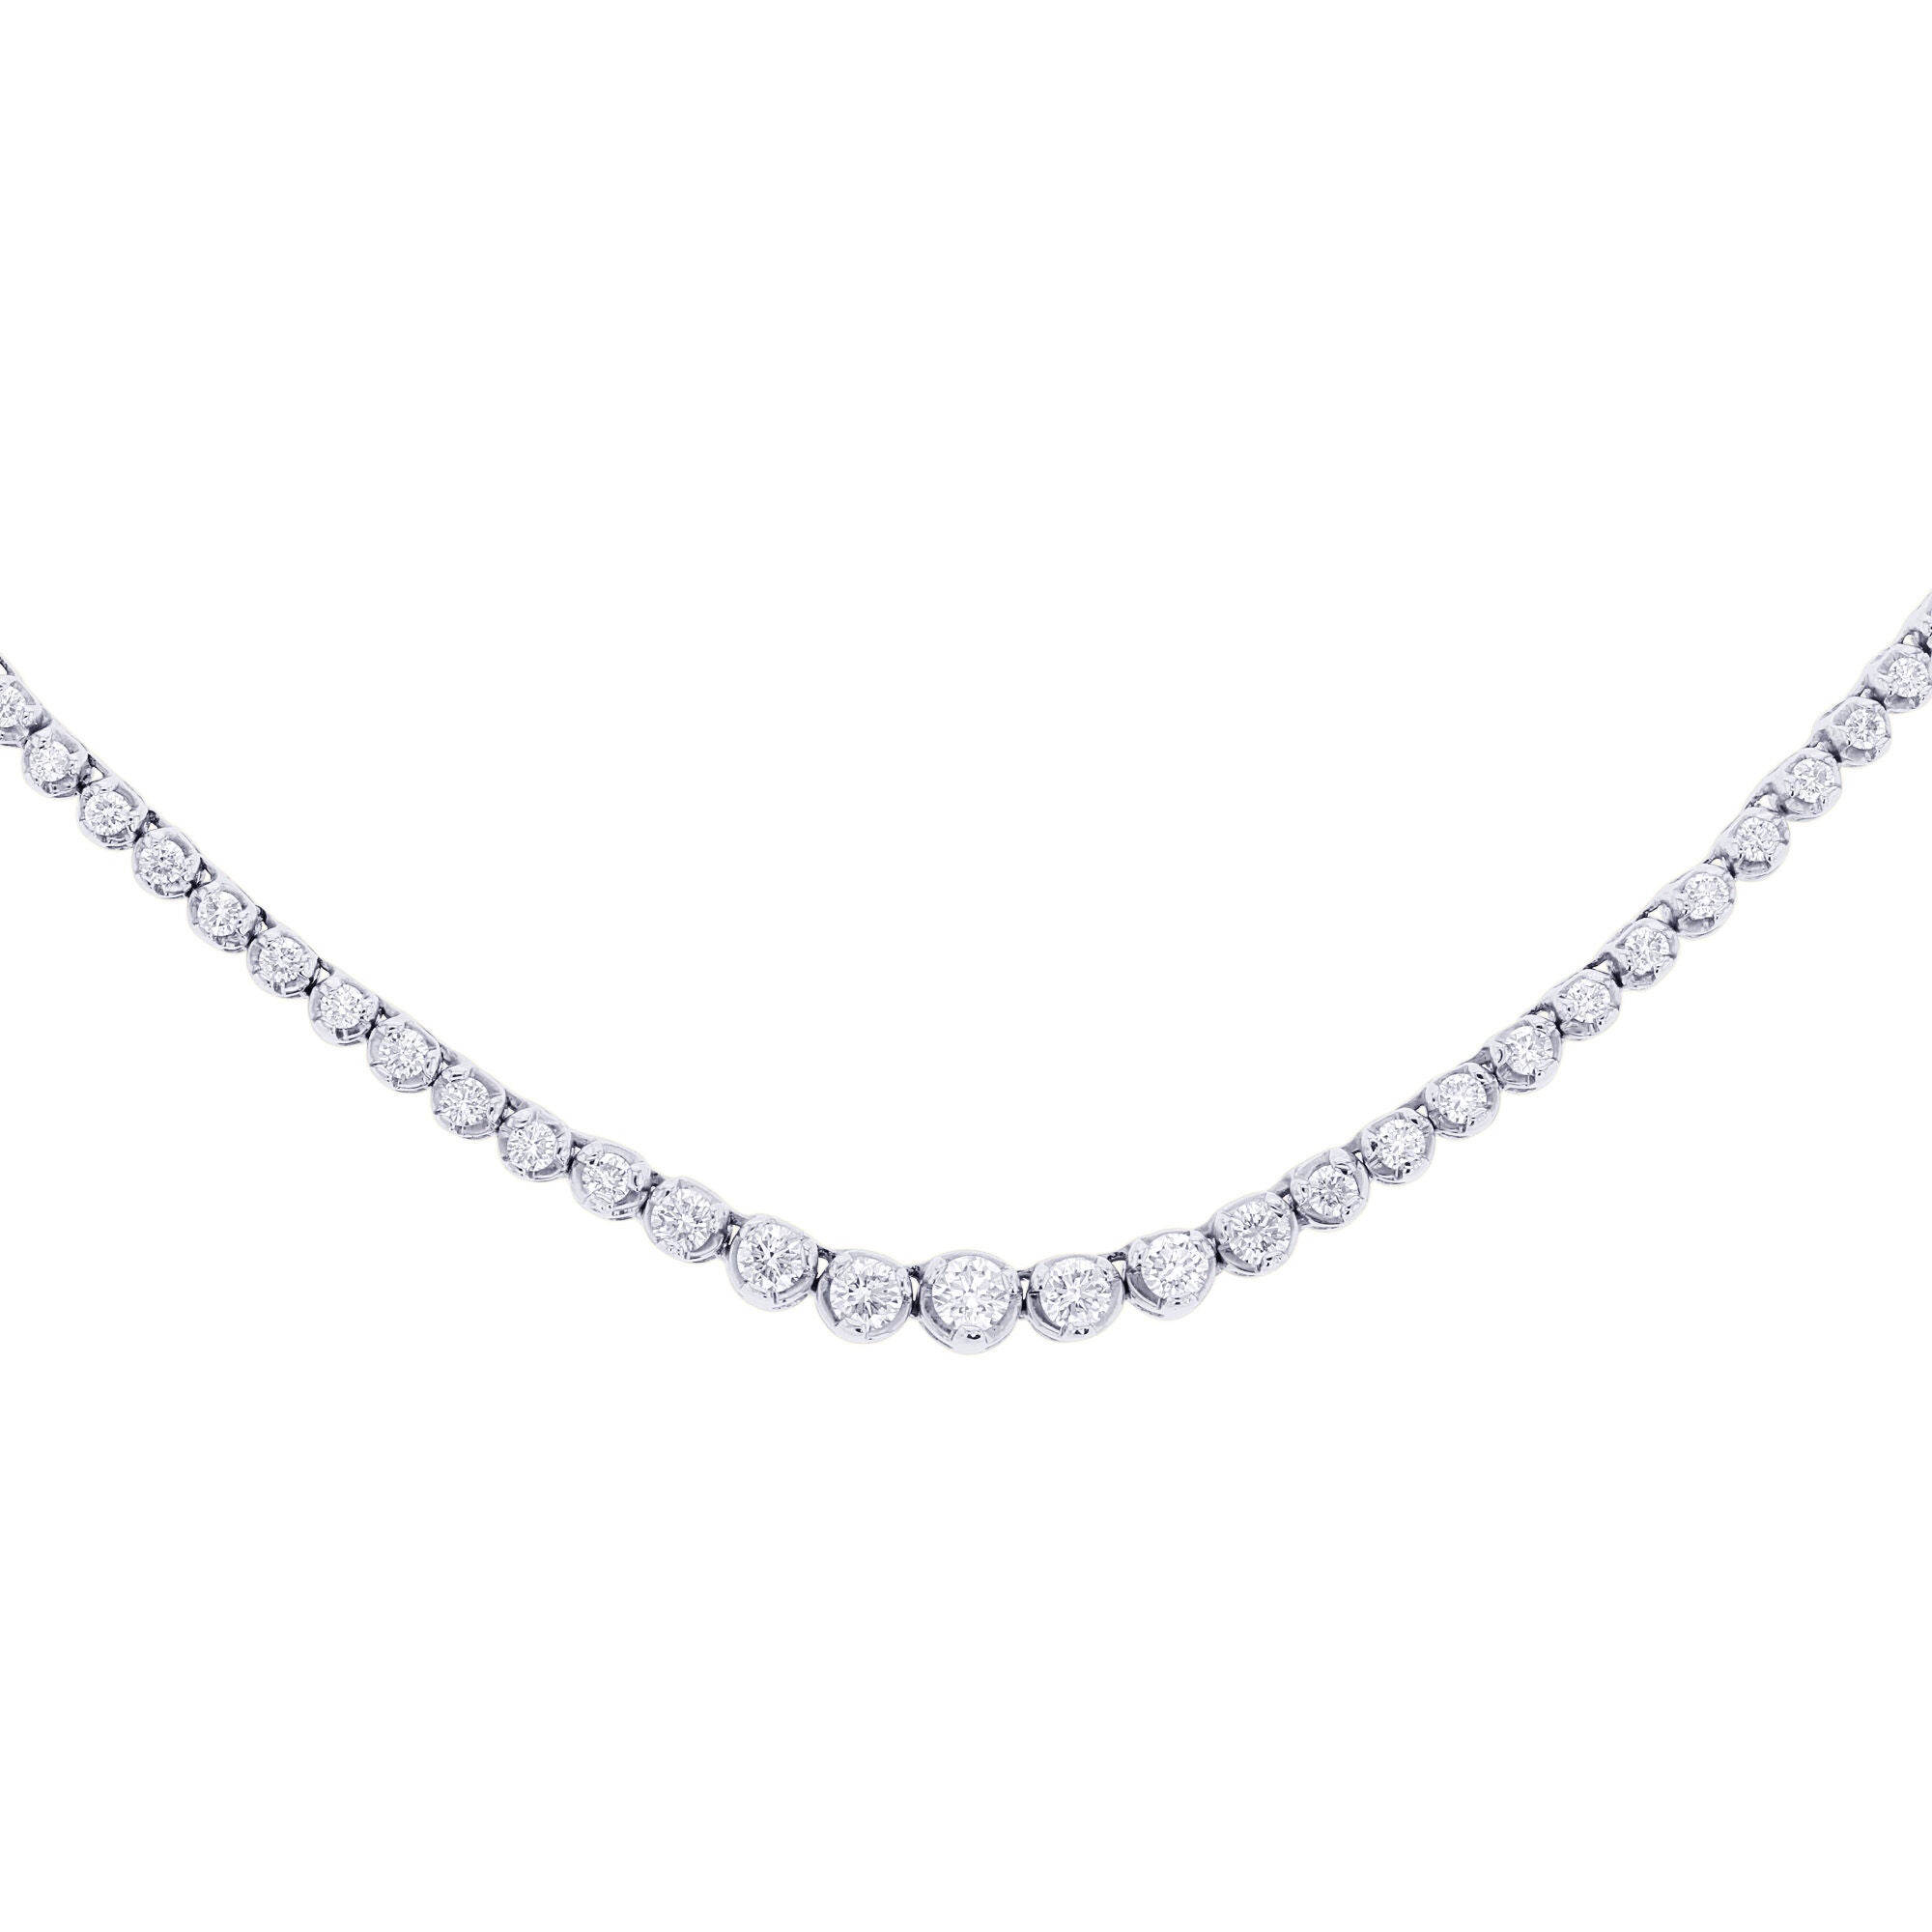 Buy Silver Necklaces & Pendants for Women by Trishty Online | Ajio.com